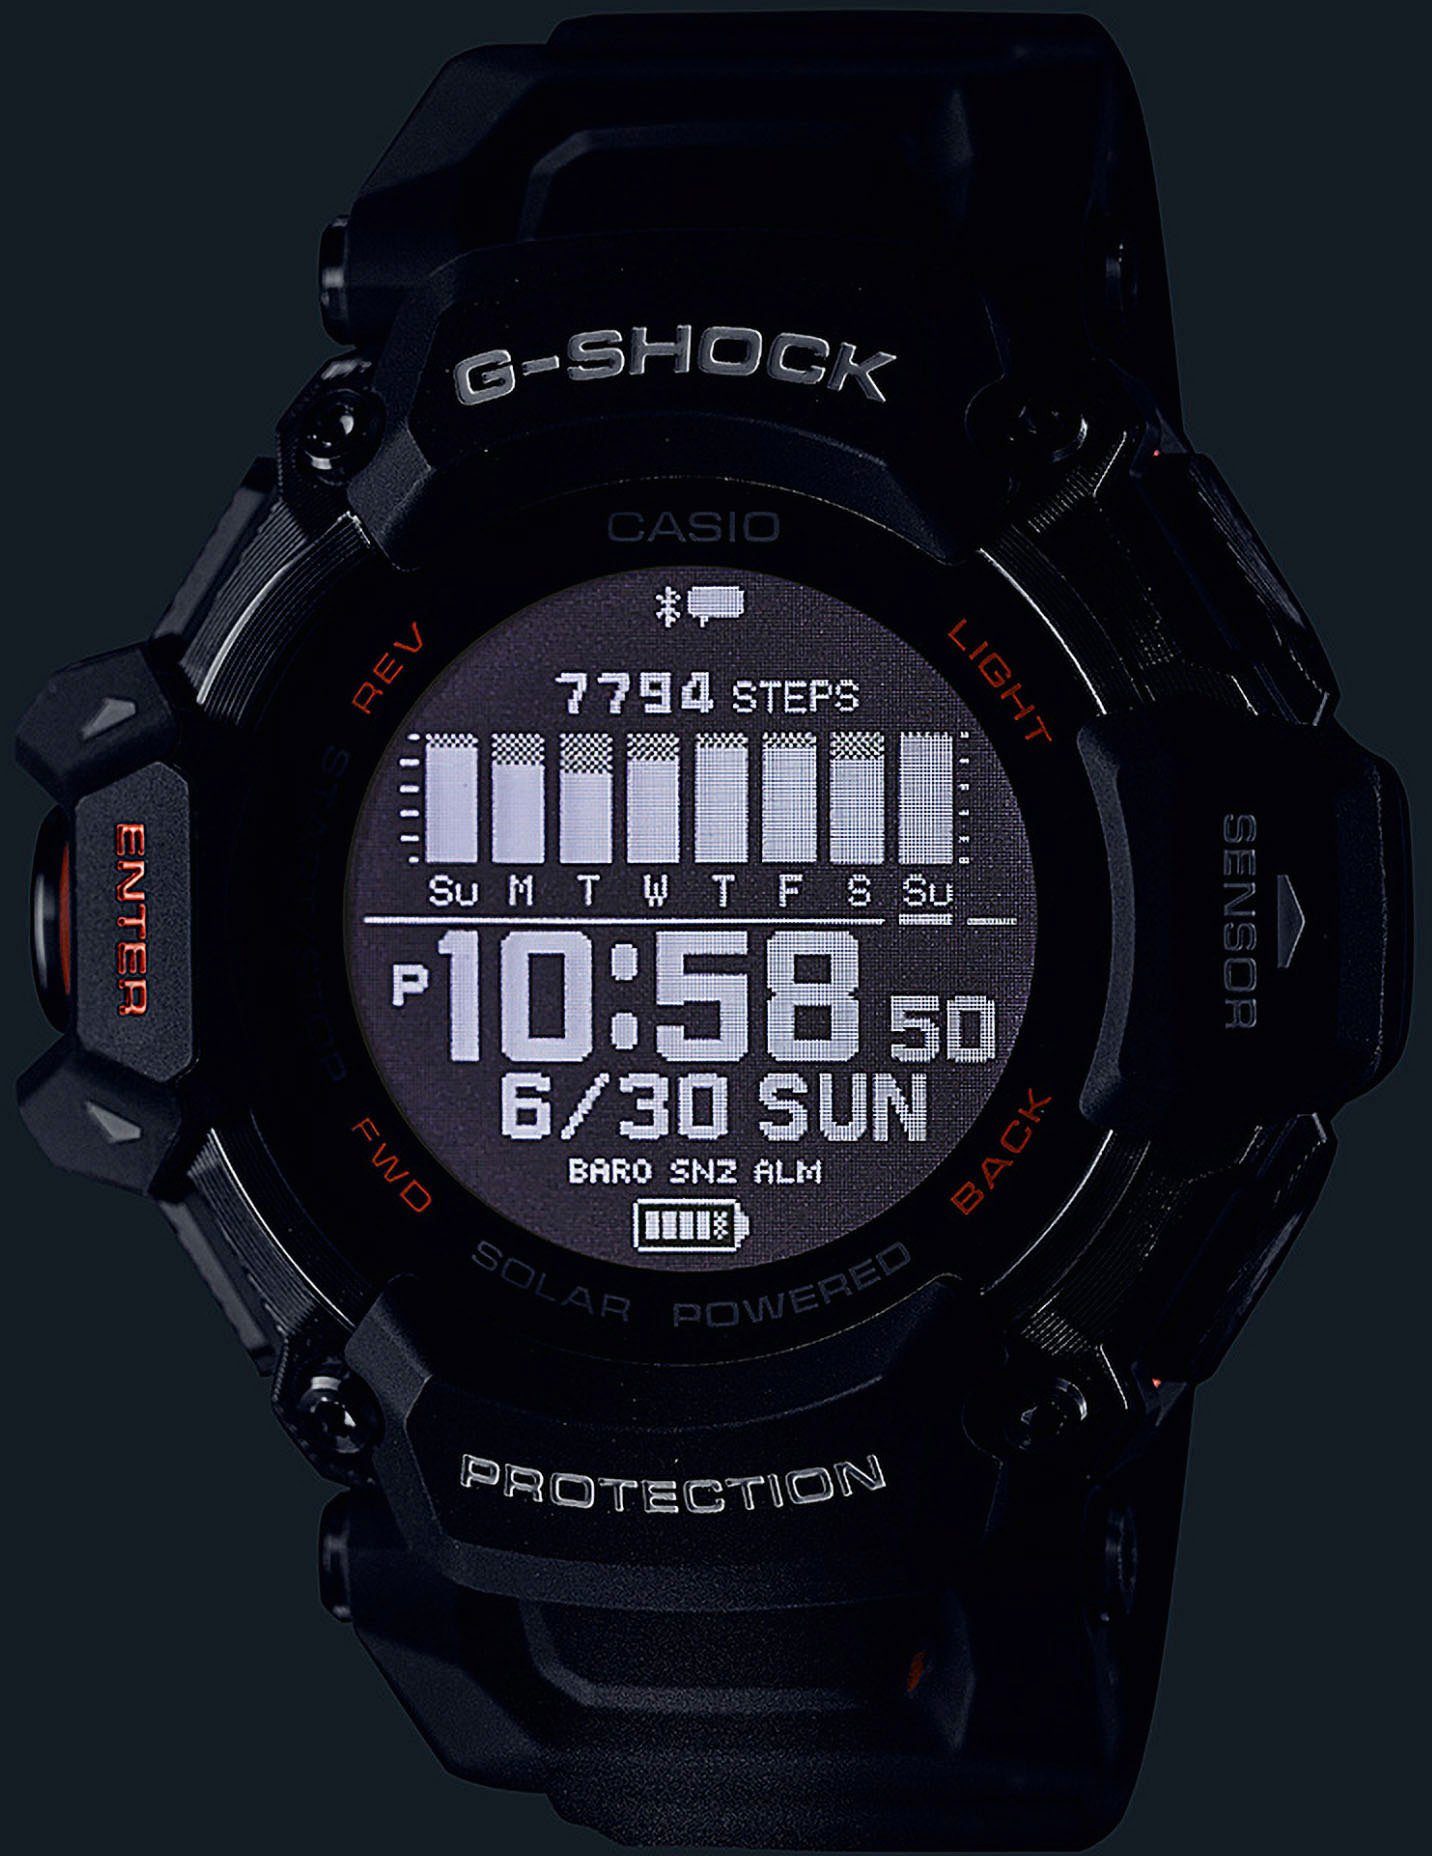 CASIO G-SHOCK GBD-H2000-1AER Solar Smartwatch